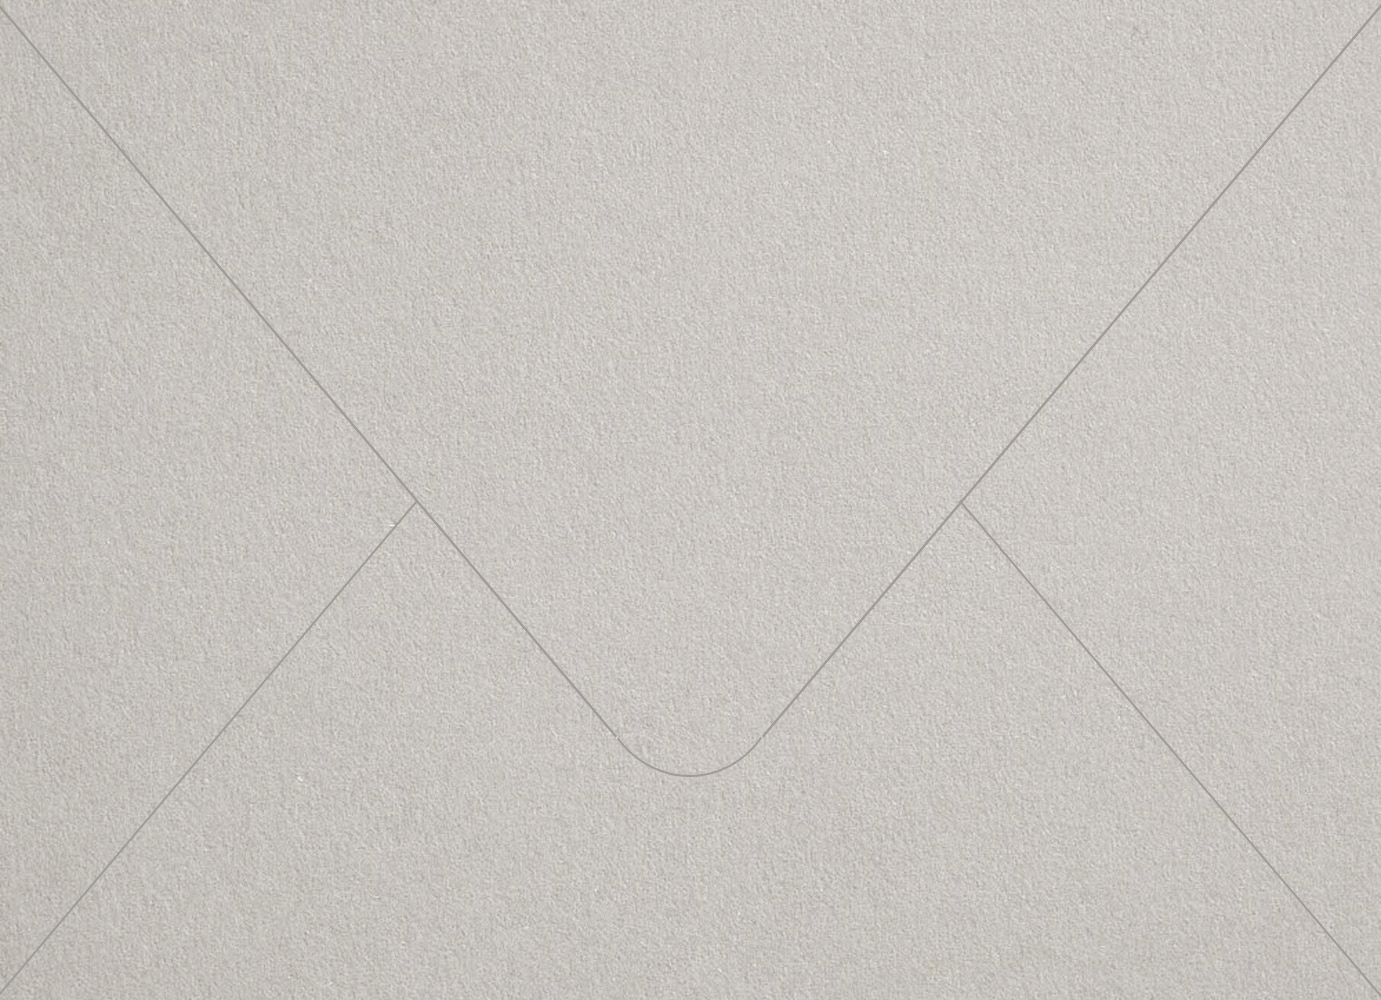 Clay Materica Envelope